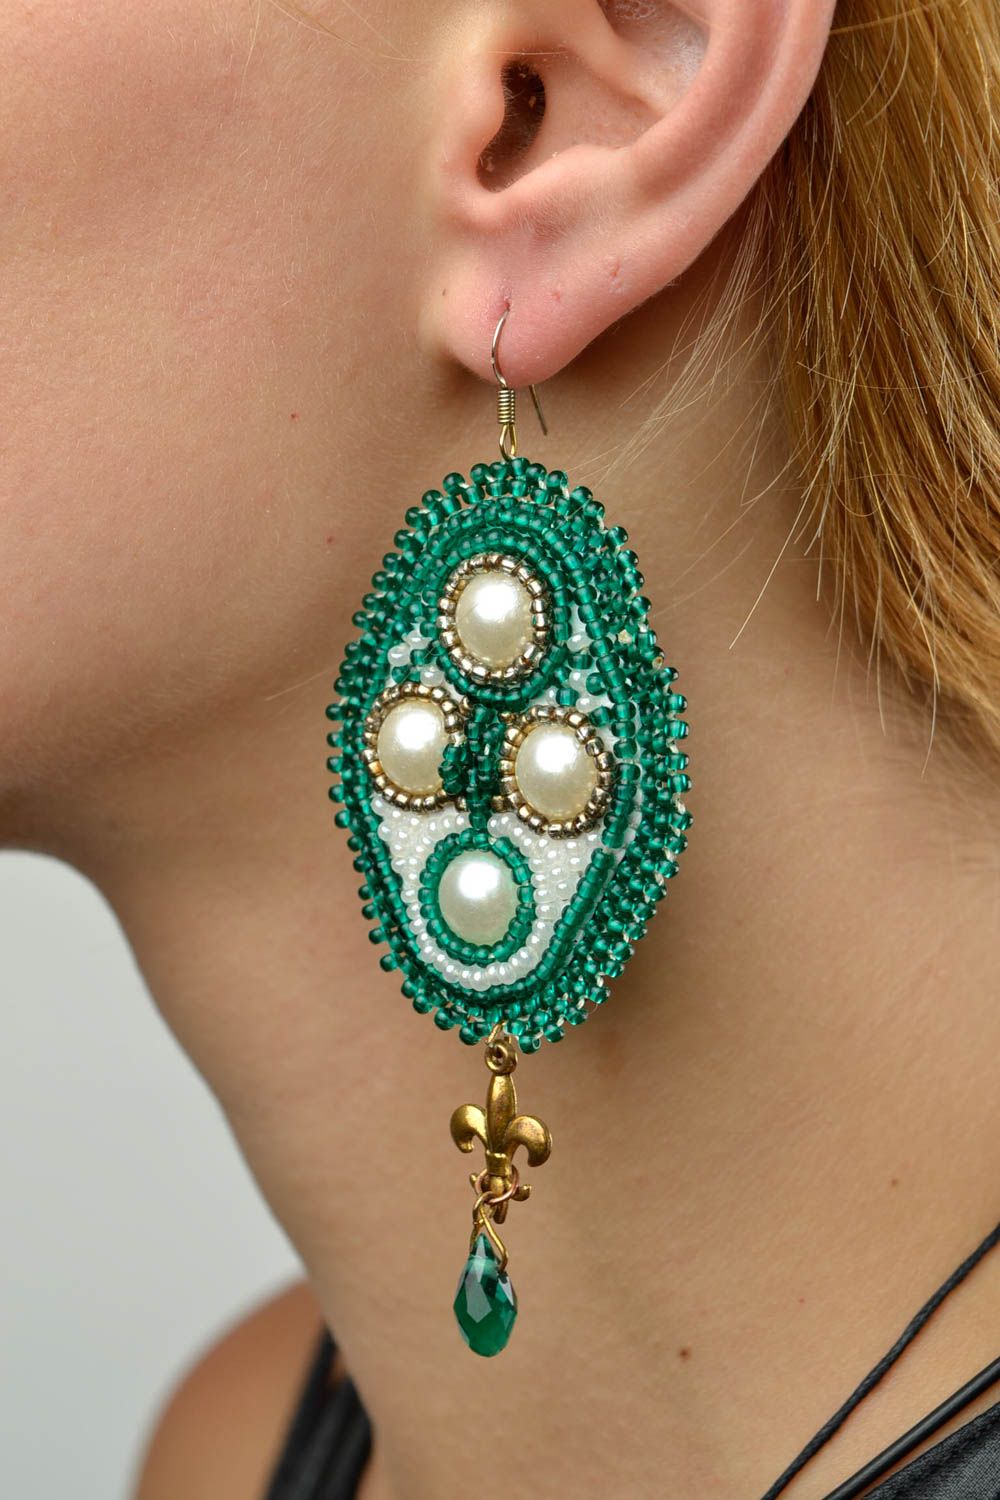 Beautiful handmade beaded earrings beautiful jewellery unusual gifts for her photo 1